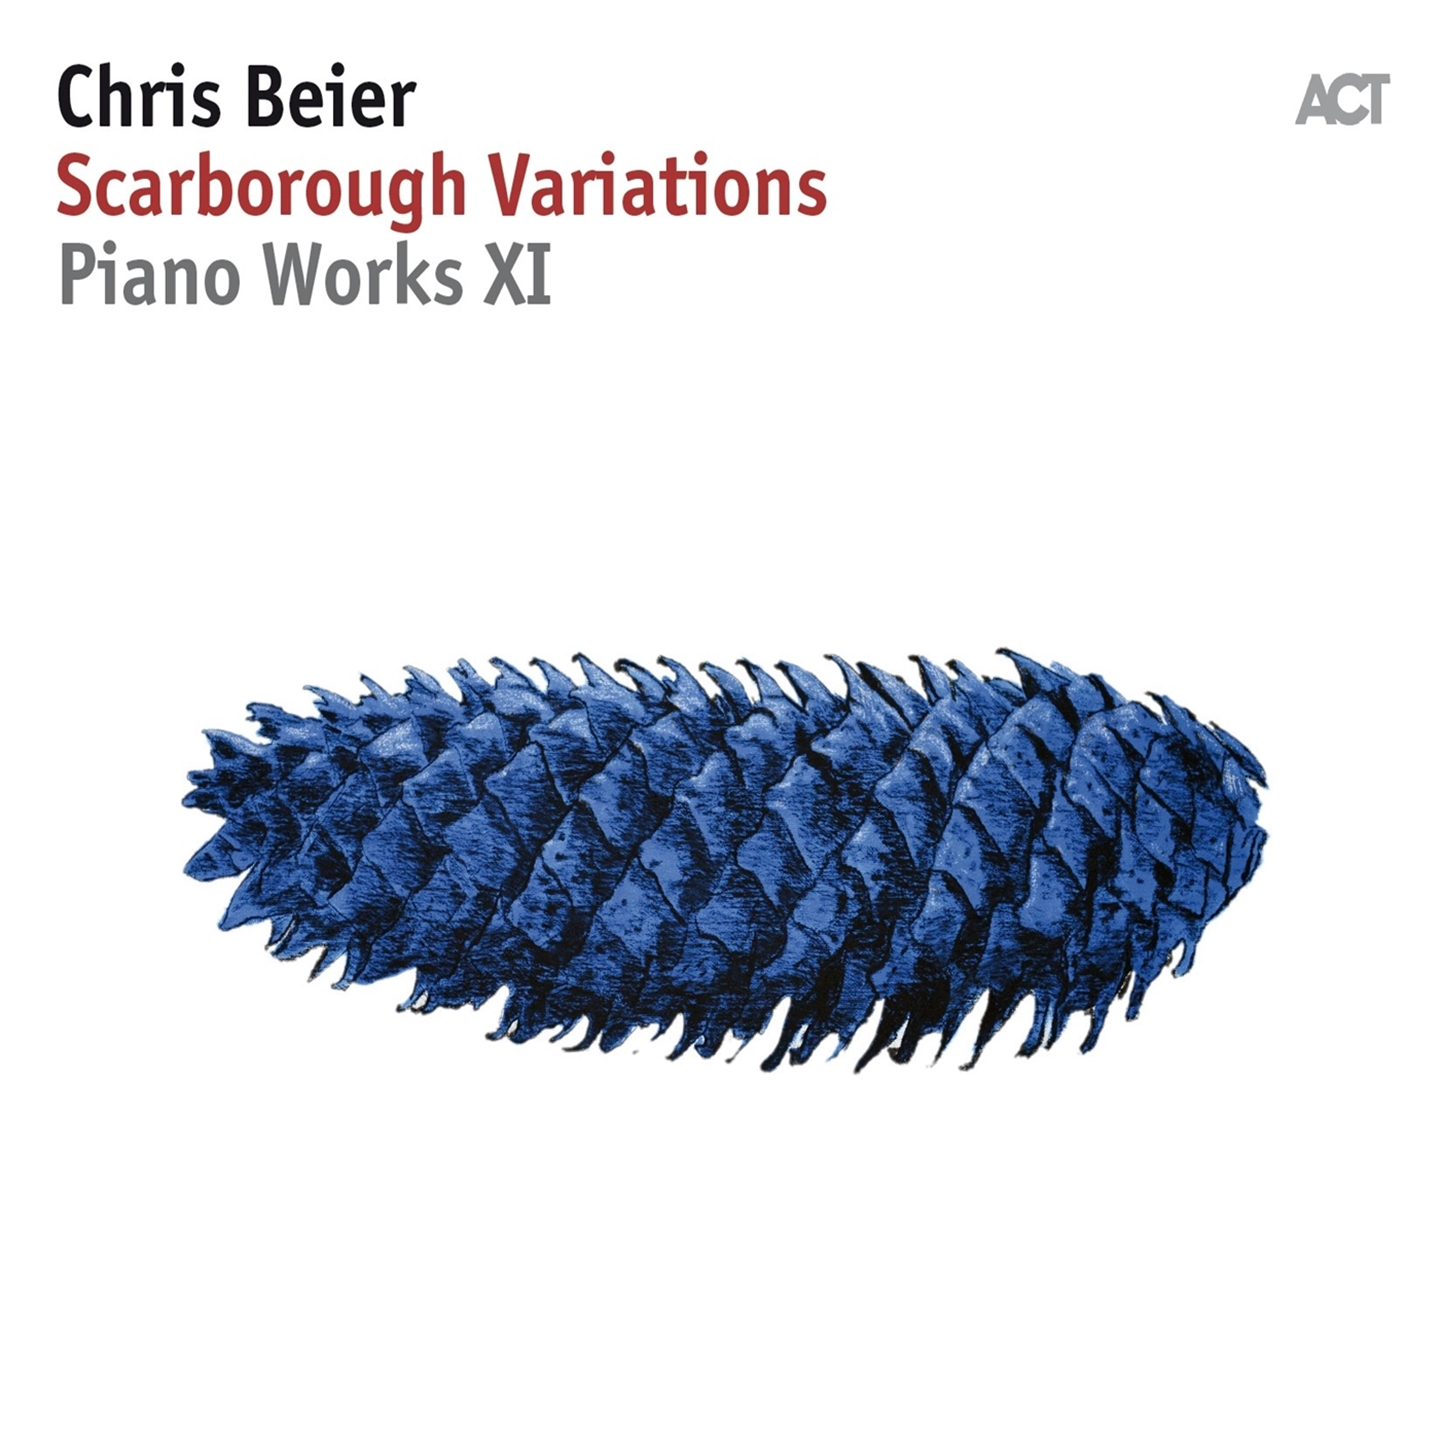 Chris Beier - Scarborough Variations - Foto 1 di 1